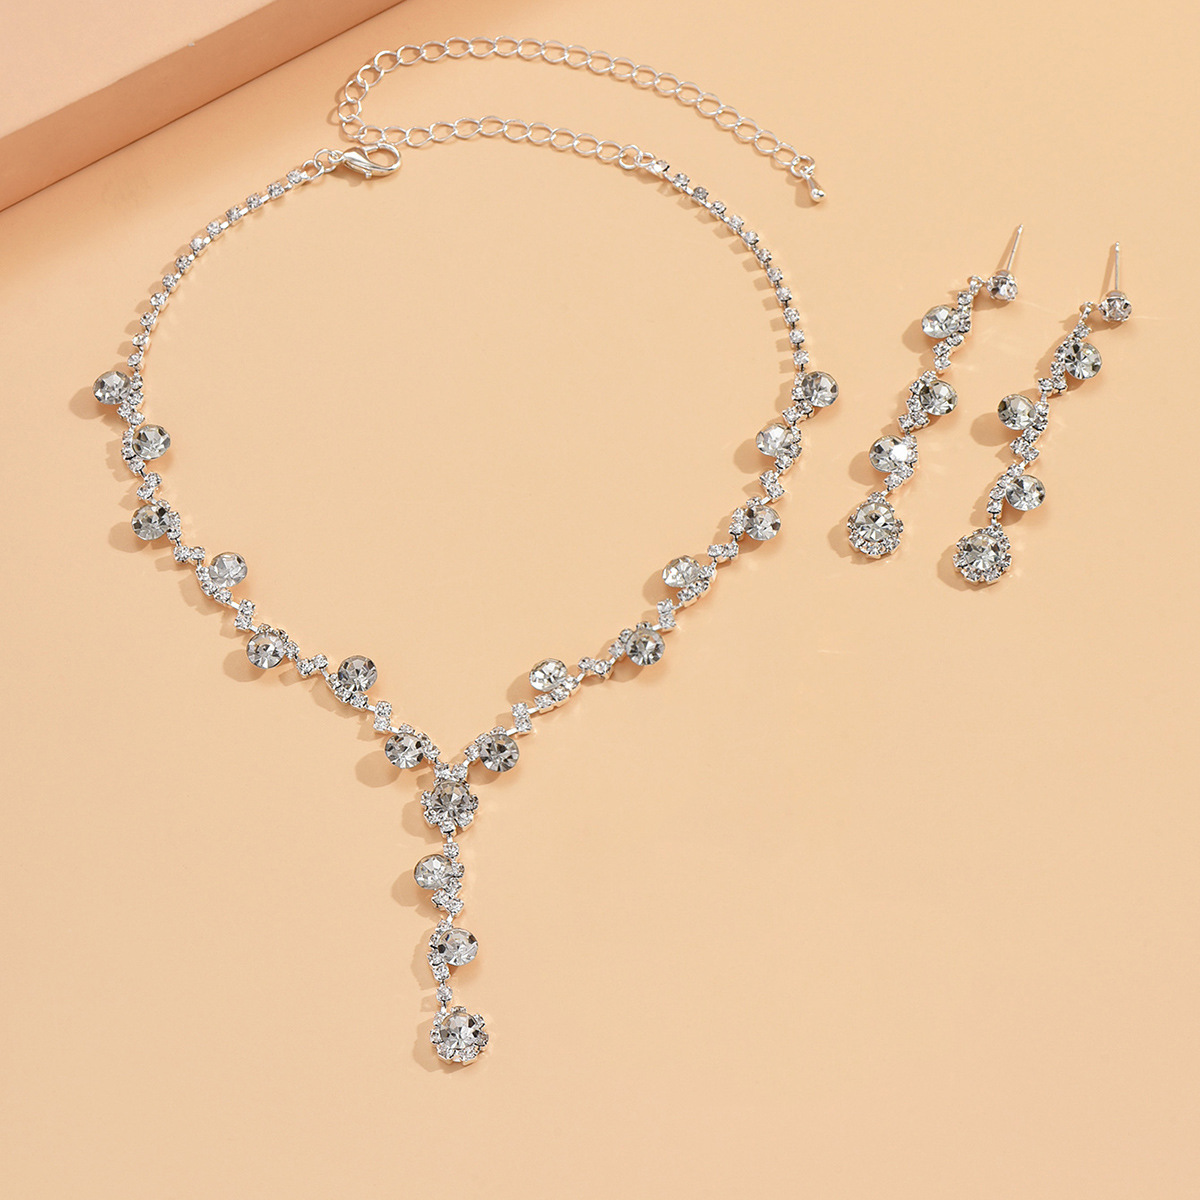 869 Silver necklace earrings 2-piece set